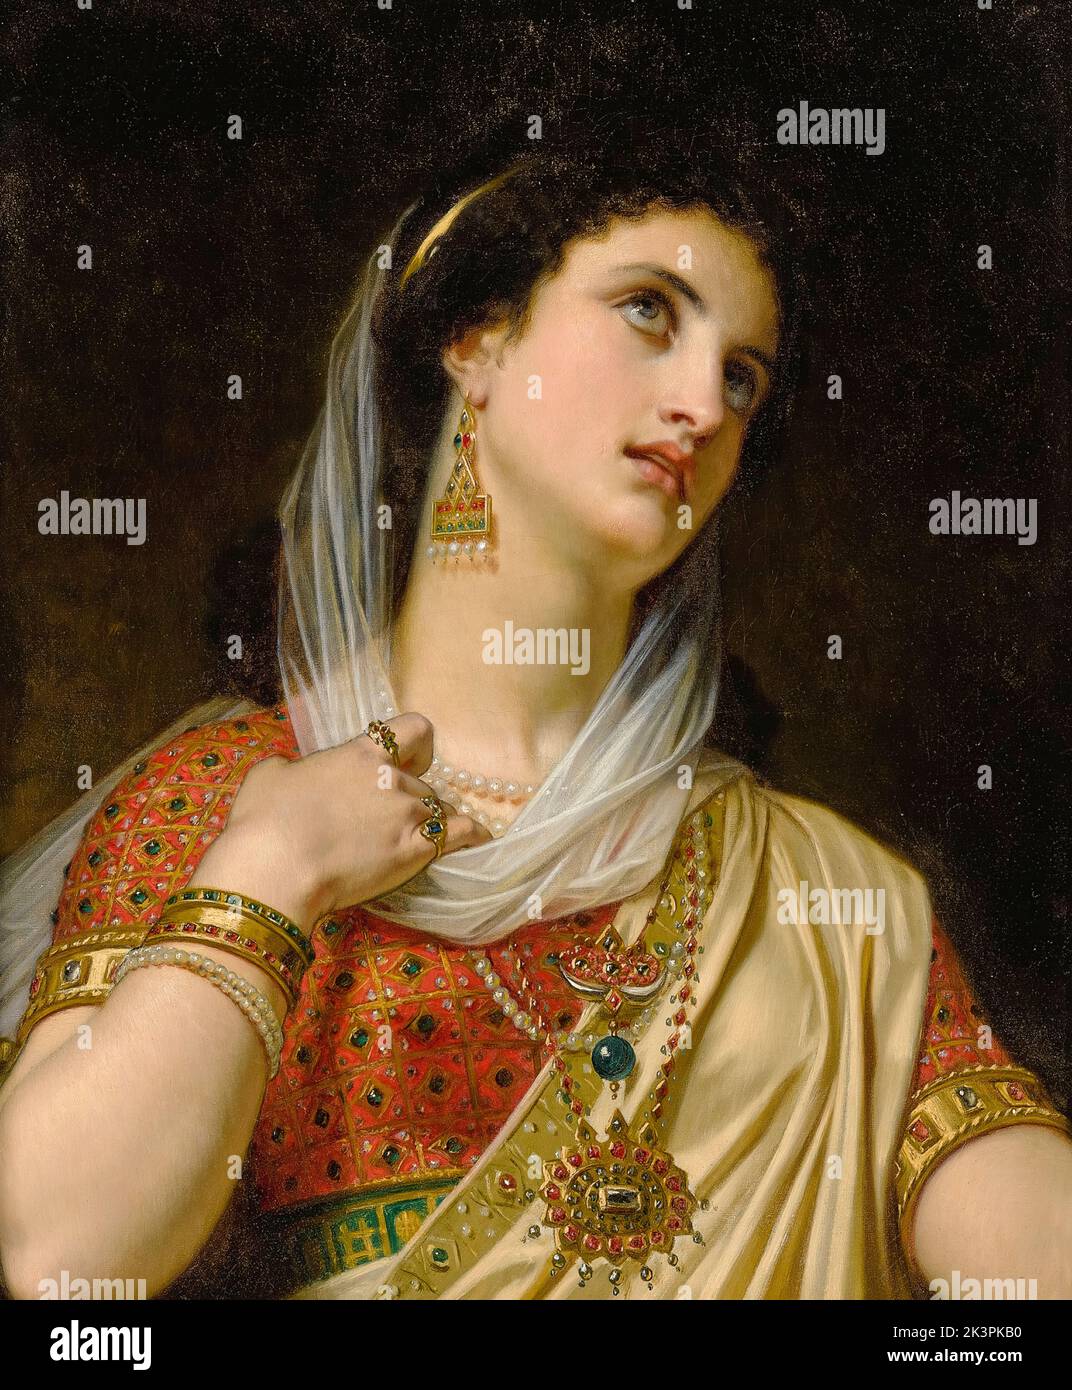 Reina Esther (de Persia y Medes), retrato al óleo sobre masonita de Hugues Merle, 1875 Foto de stock